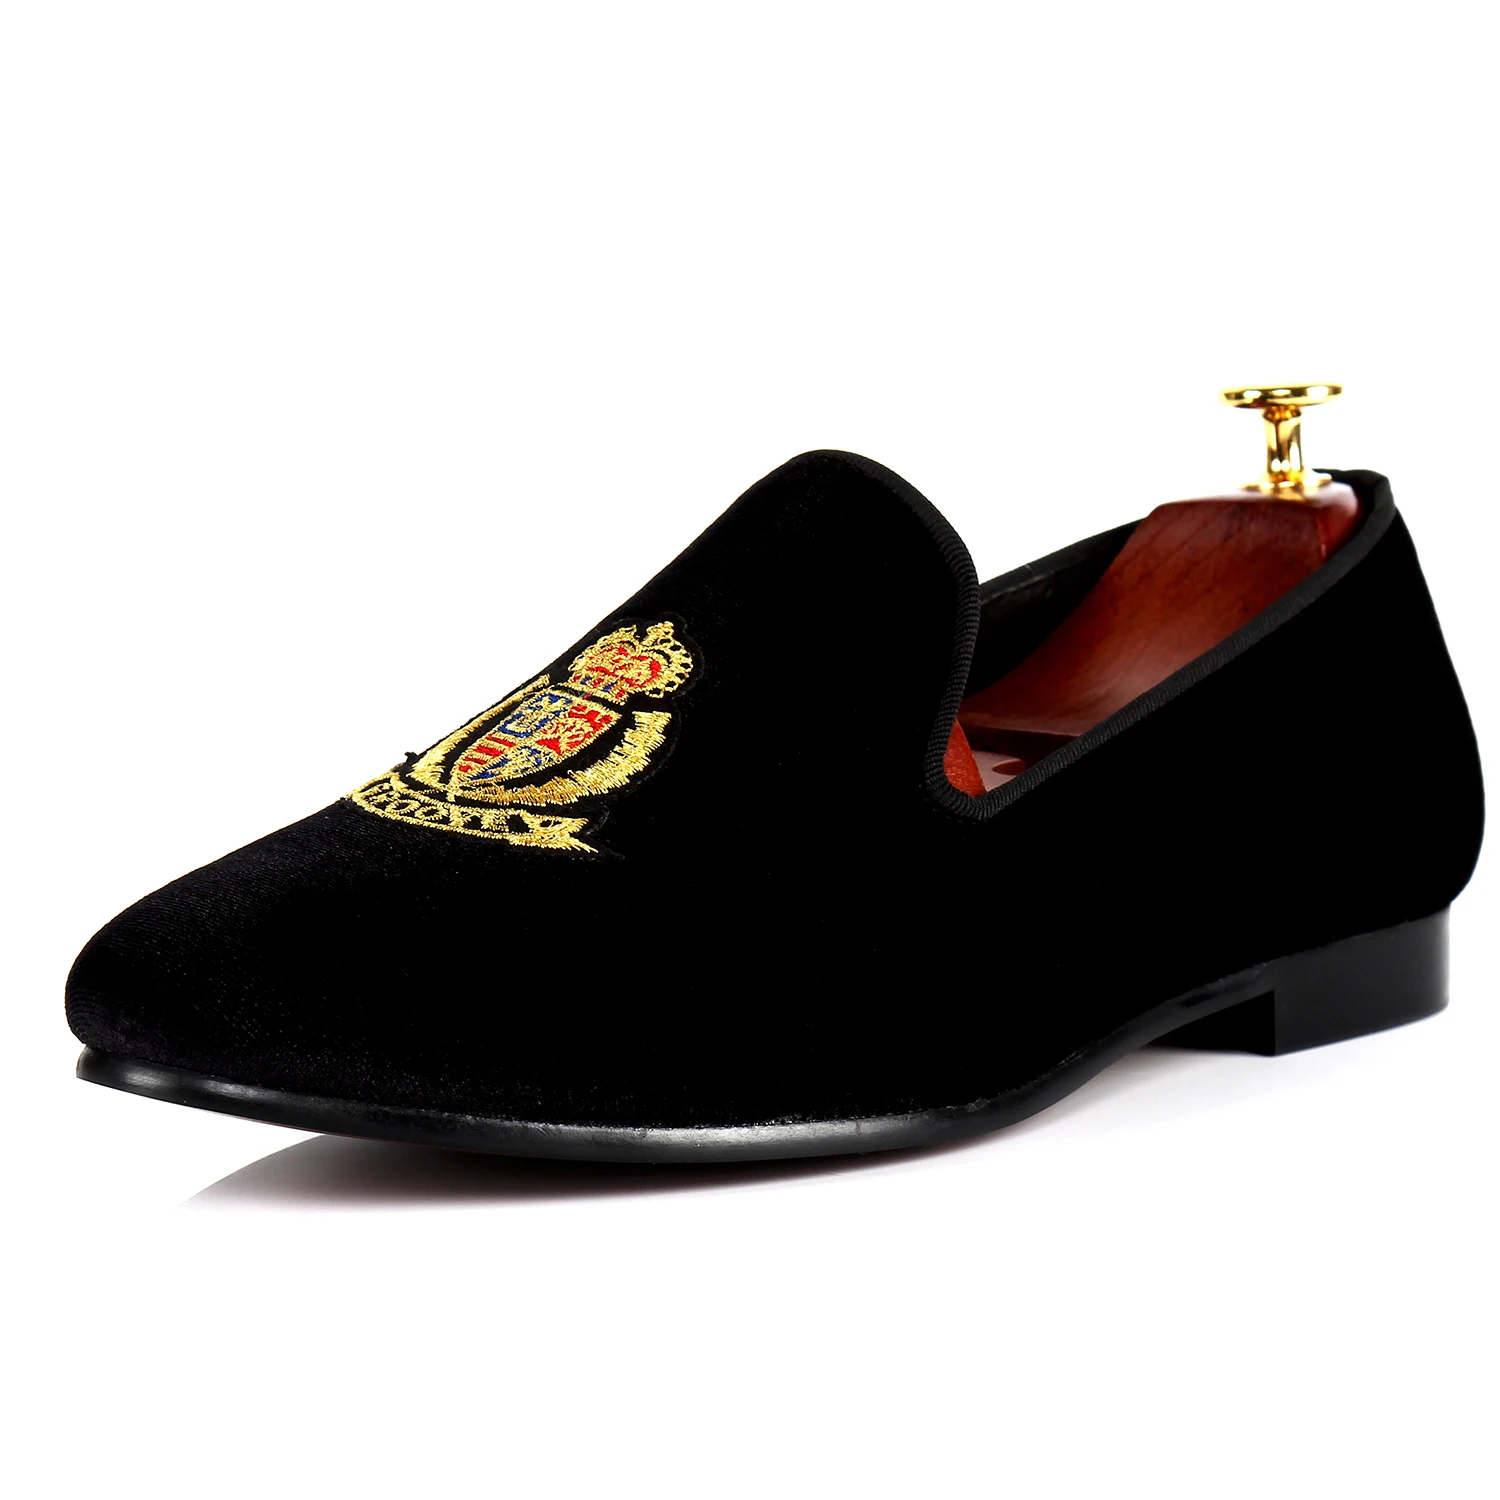 

Harpelunde Men Driving Shoes Black Motif Velvet Loafers Fashion Casual Shoes Size 7-14